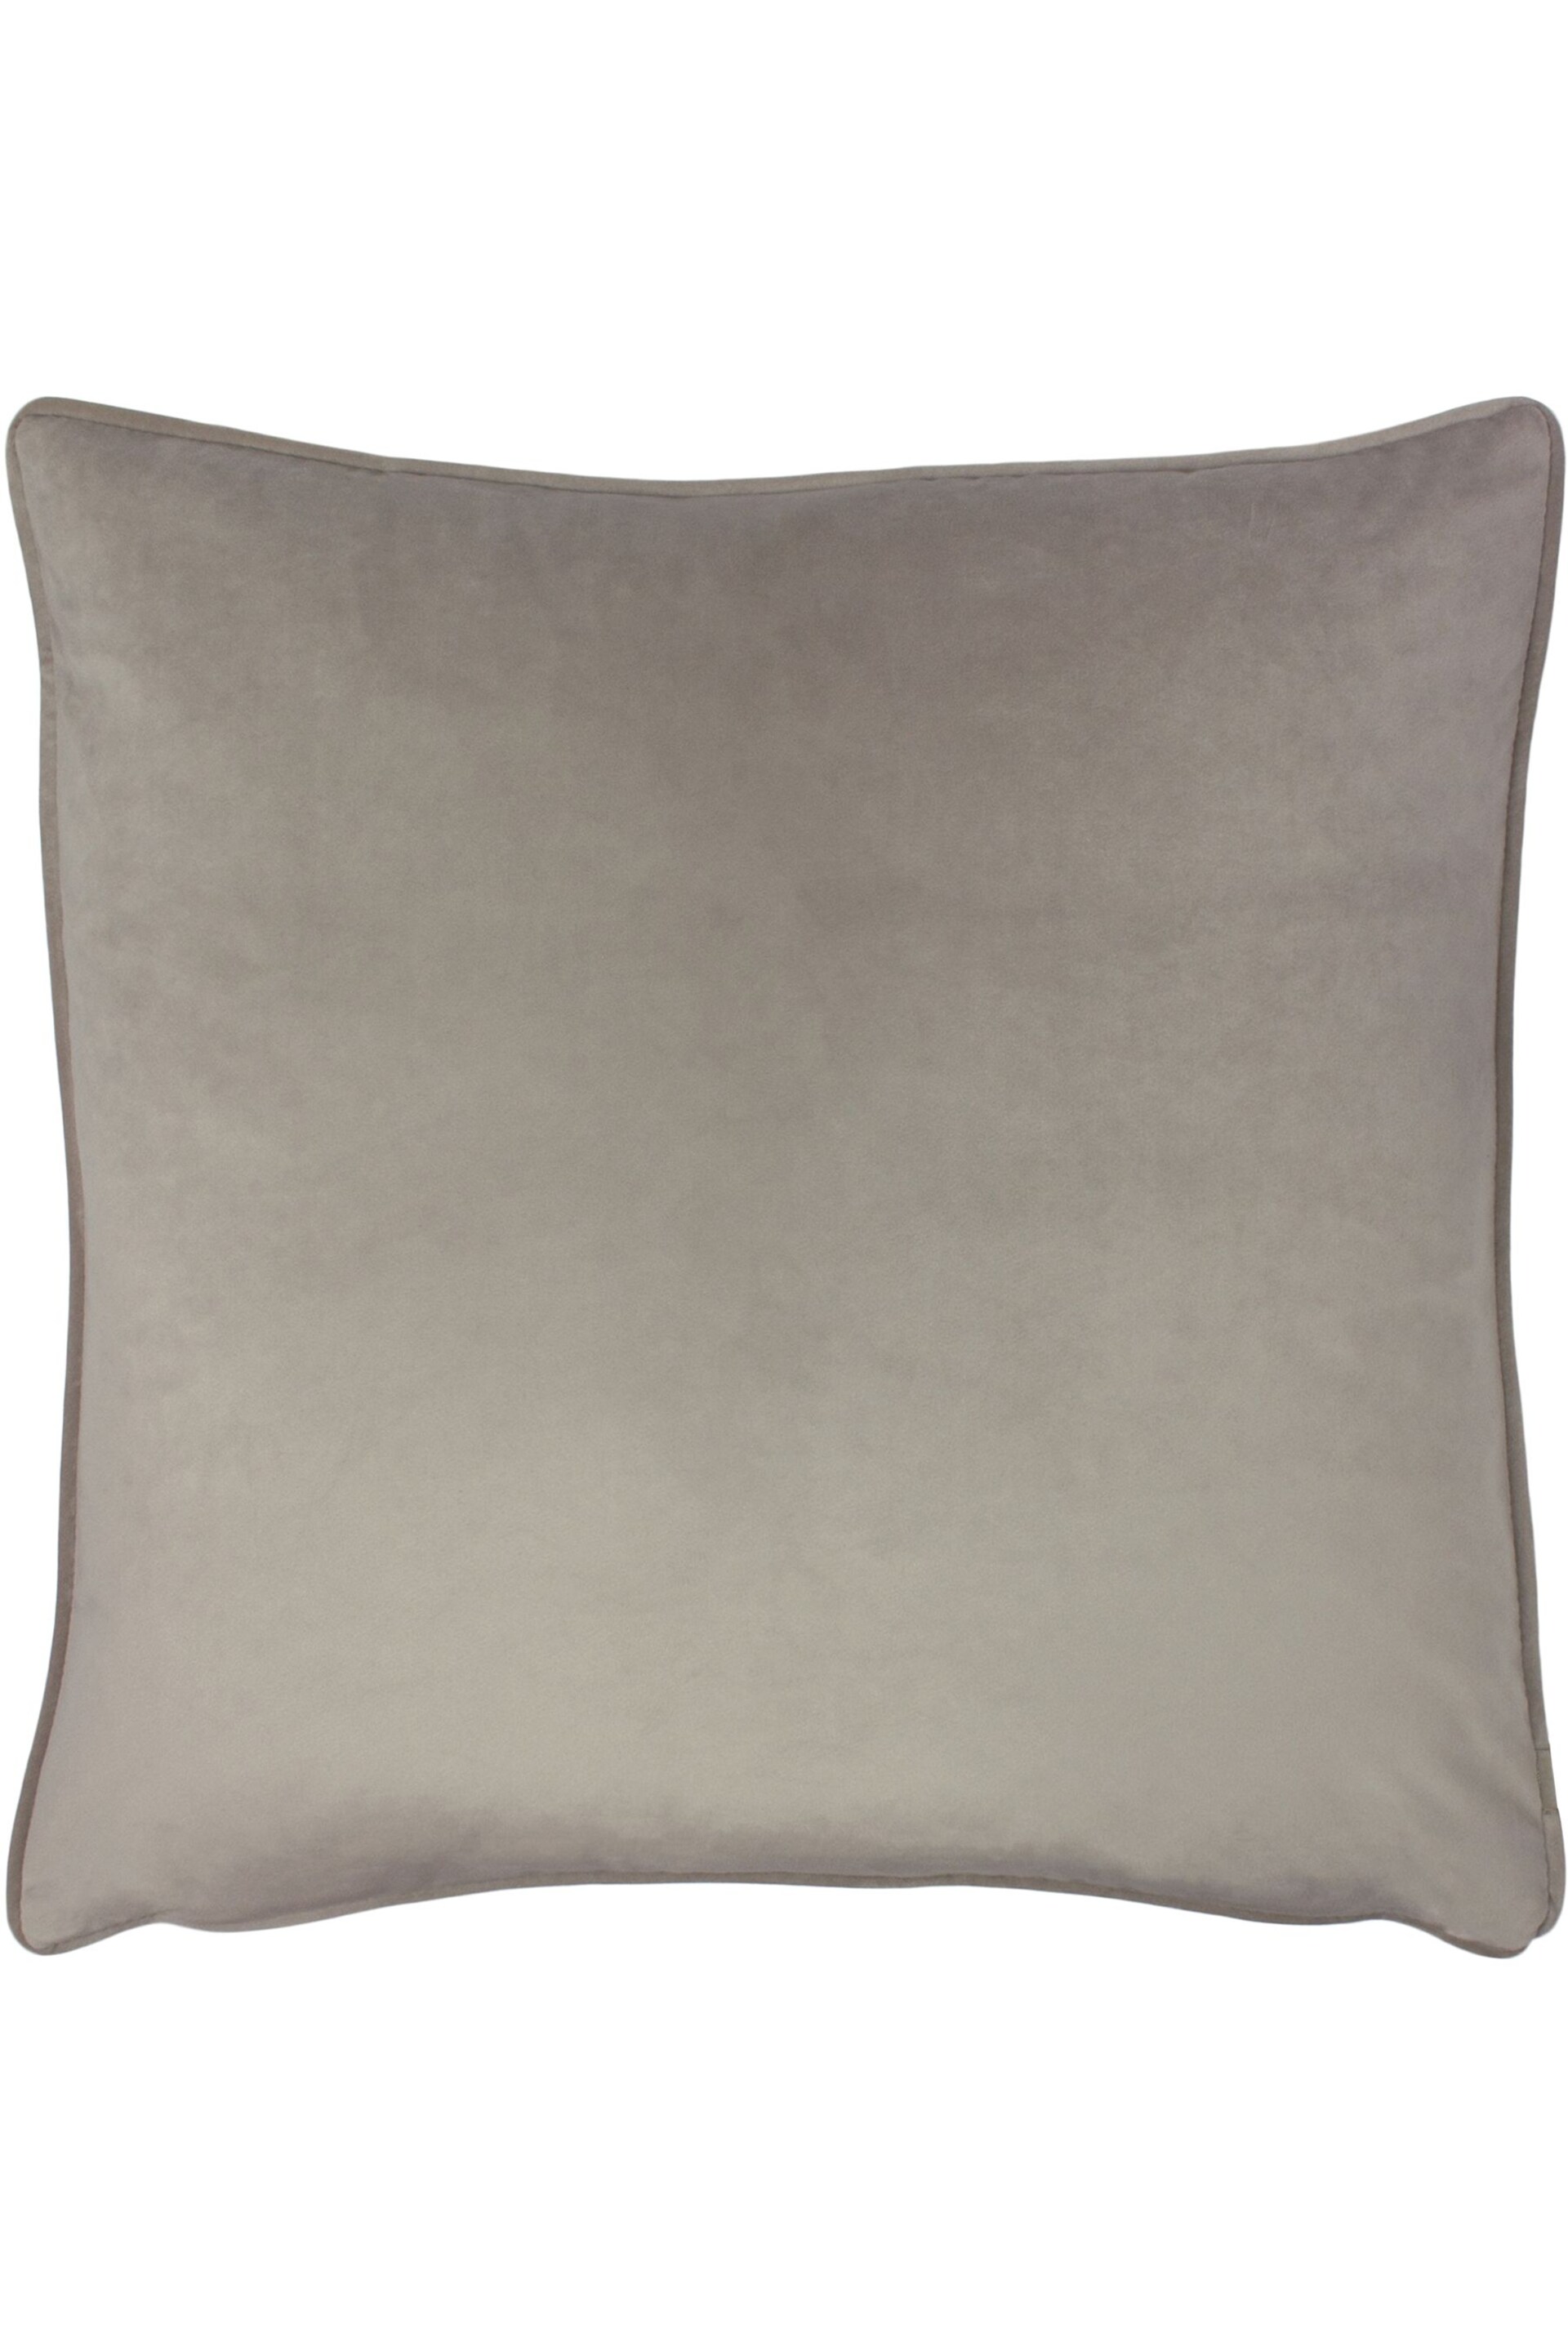 Evans Lichfield Mink Grey Opulence Velvet Polyester Filled Cushion - Image 1 of 3